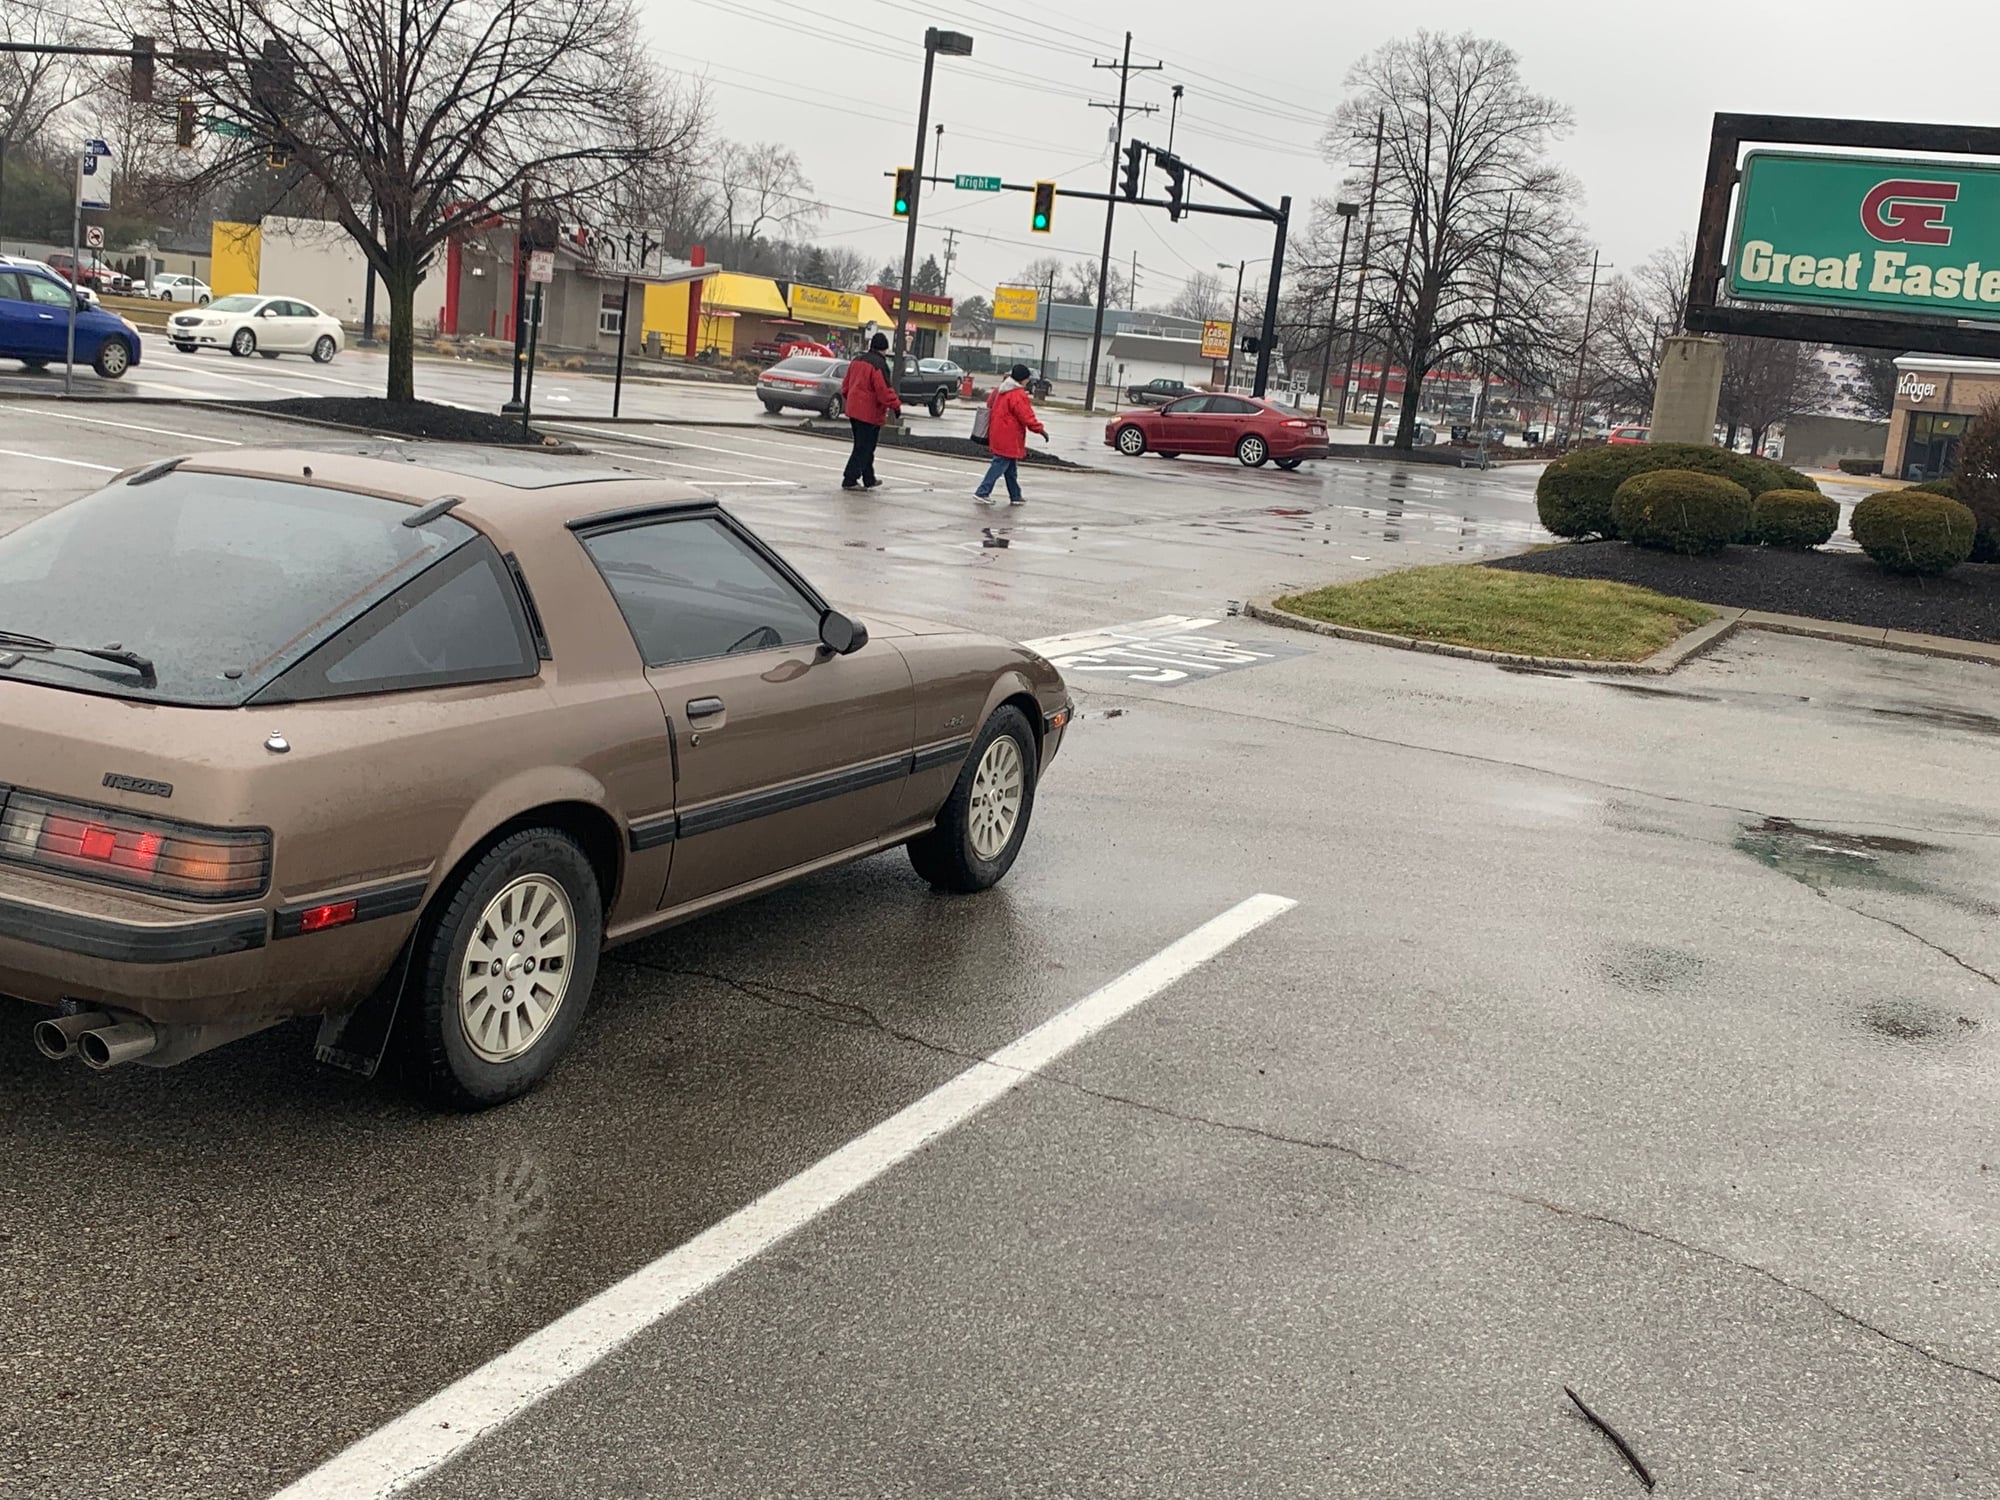 1985 Mazda RX-7 - 1985 Mazda RX7 - Used - Columbus, OH 43123, United States